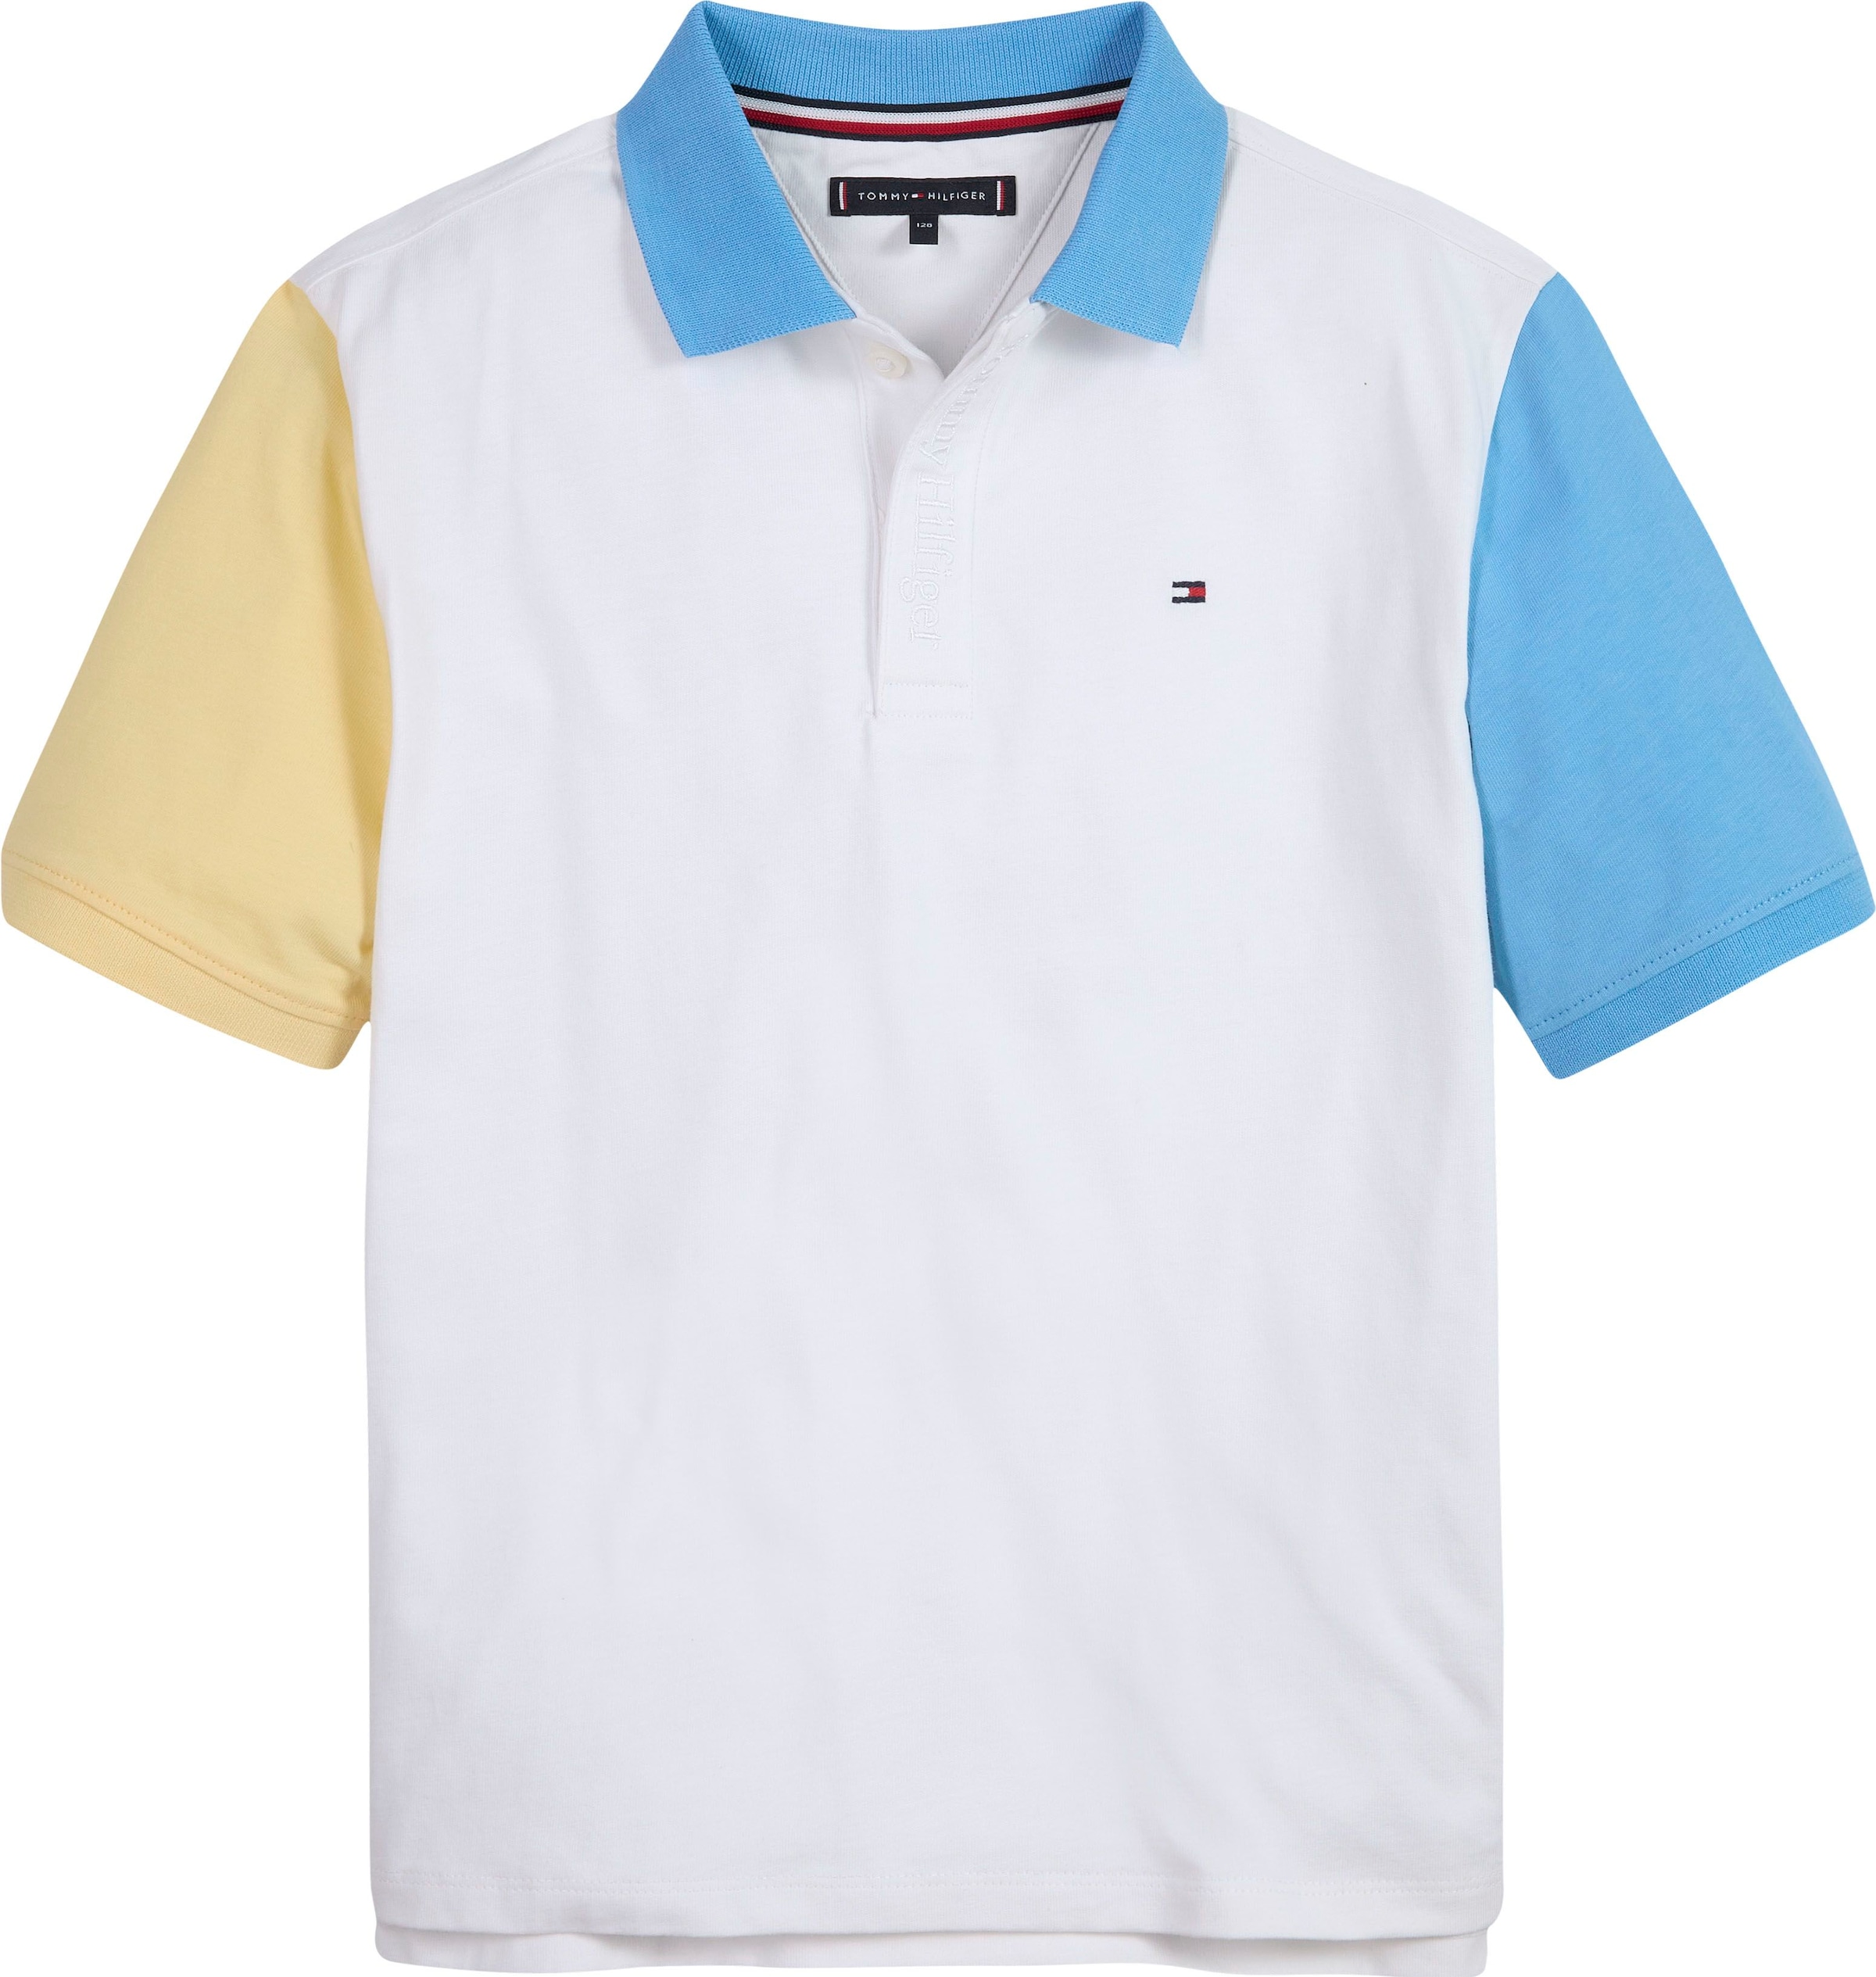 Tommy Hilfiger Poloshirt »OVERSIZED COLORBLOCK POLO«, mit Ärmeln im Colorblock-Design